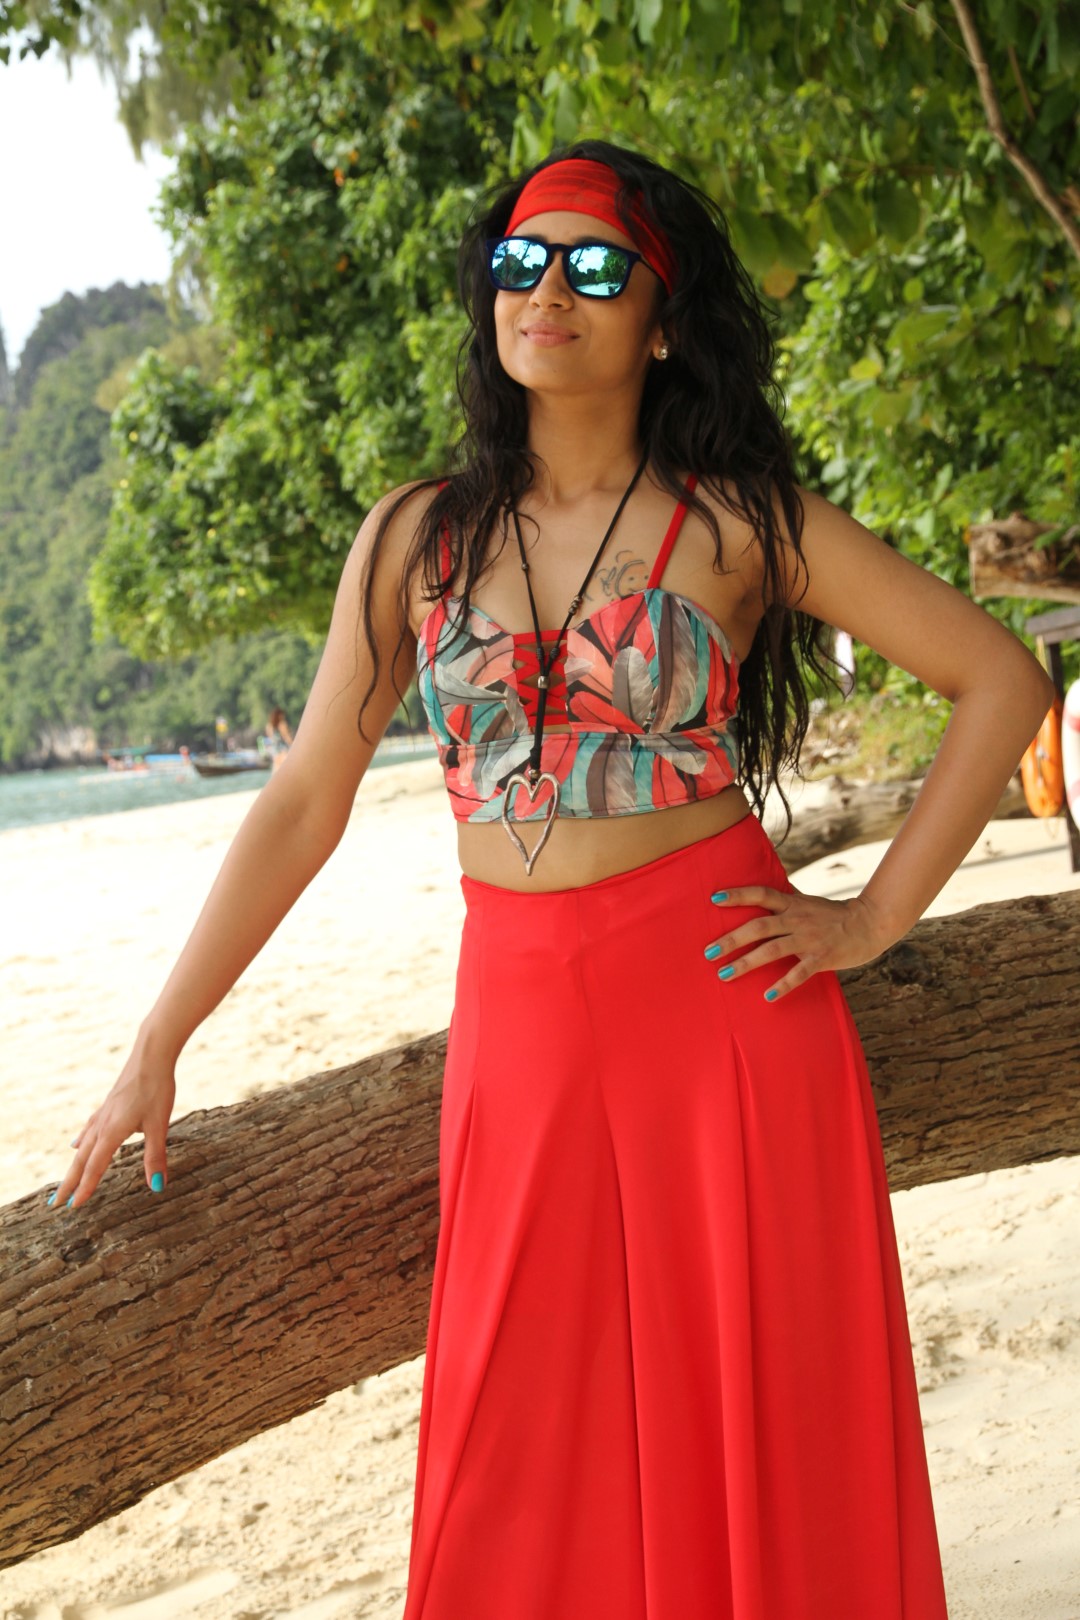 Trisha looking Red Hot in Beach